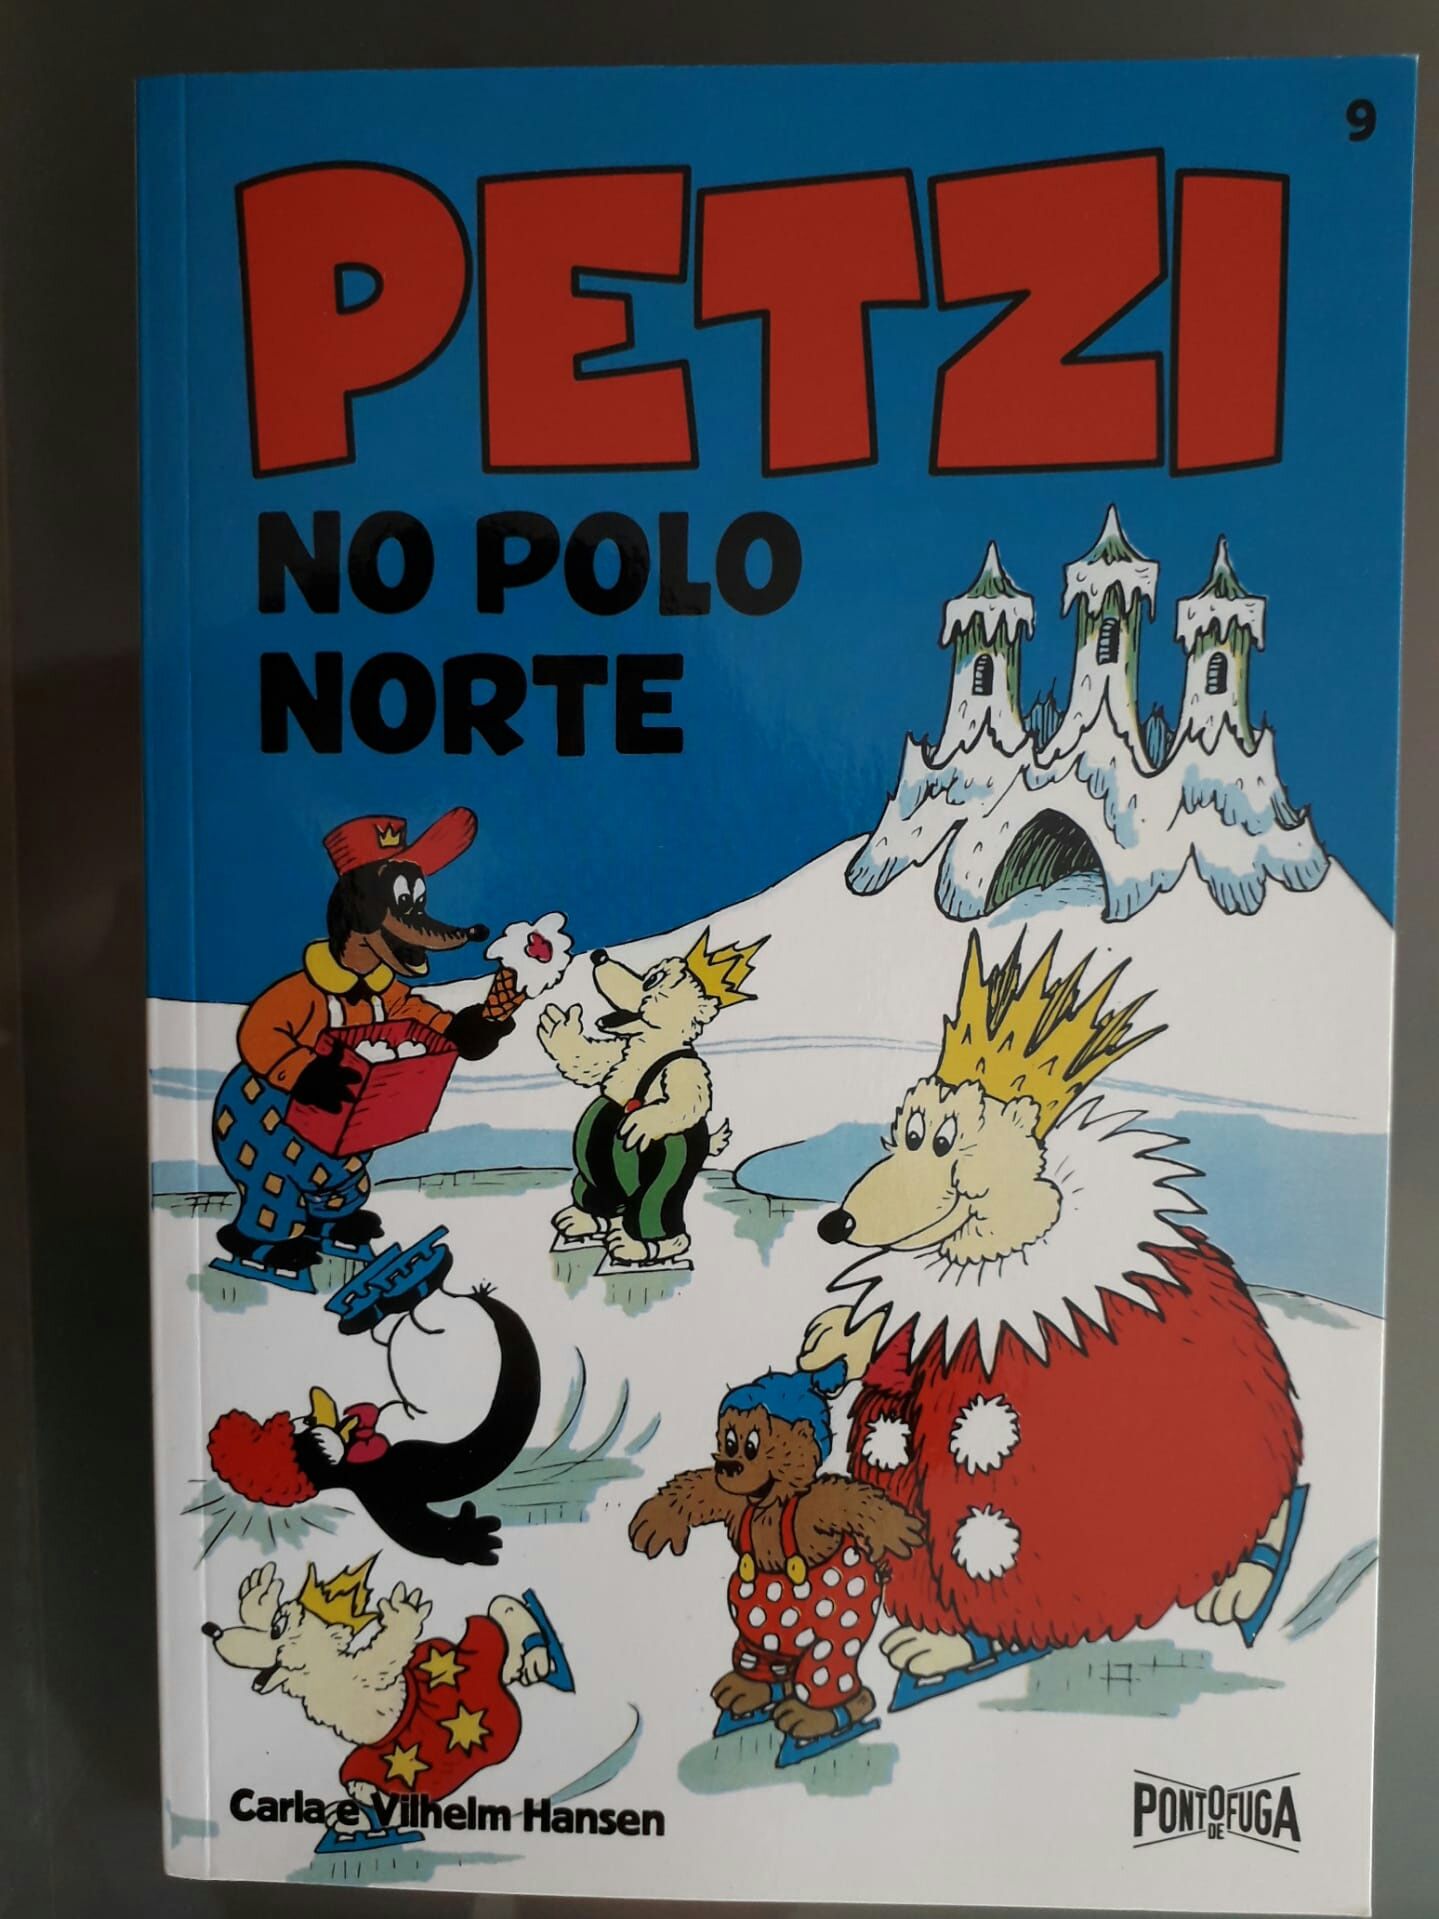 Livro "PETSI - No Polo Norte "